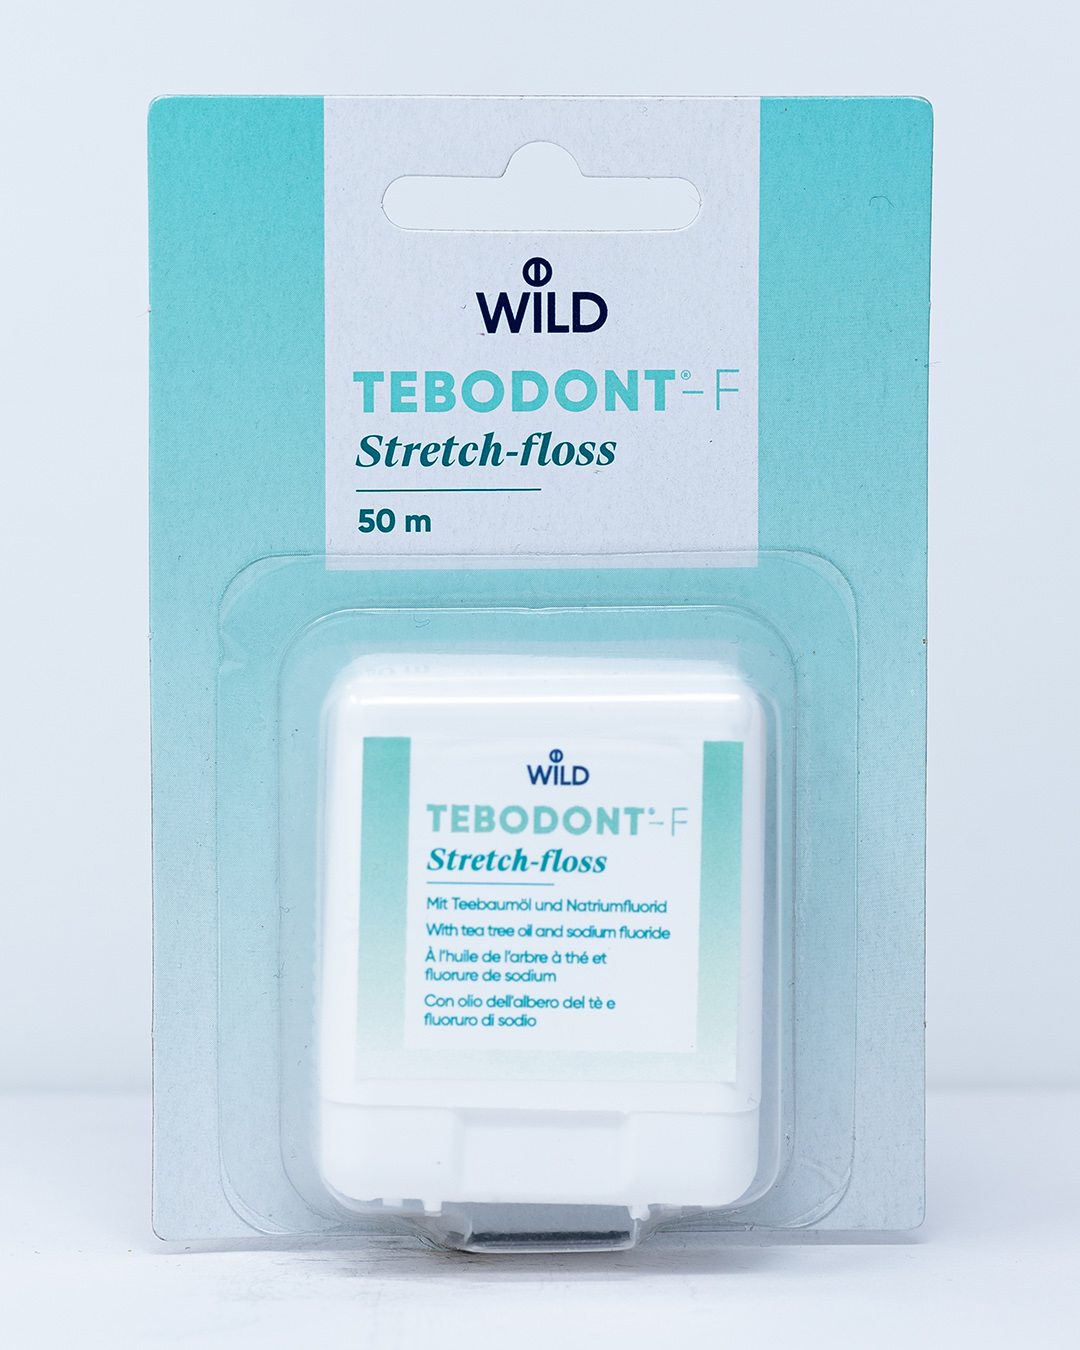 Tebodont Filo Interdentale Stretch al Tea Tree Oil – 50 ml